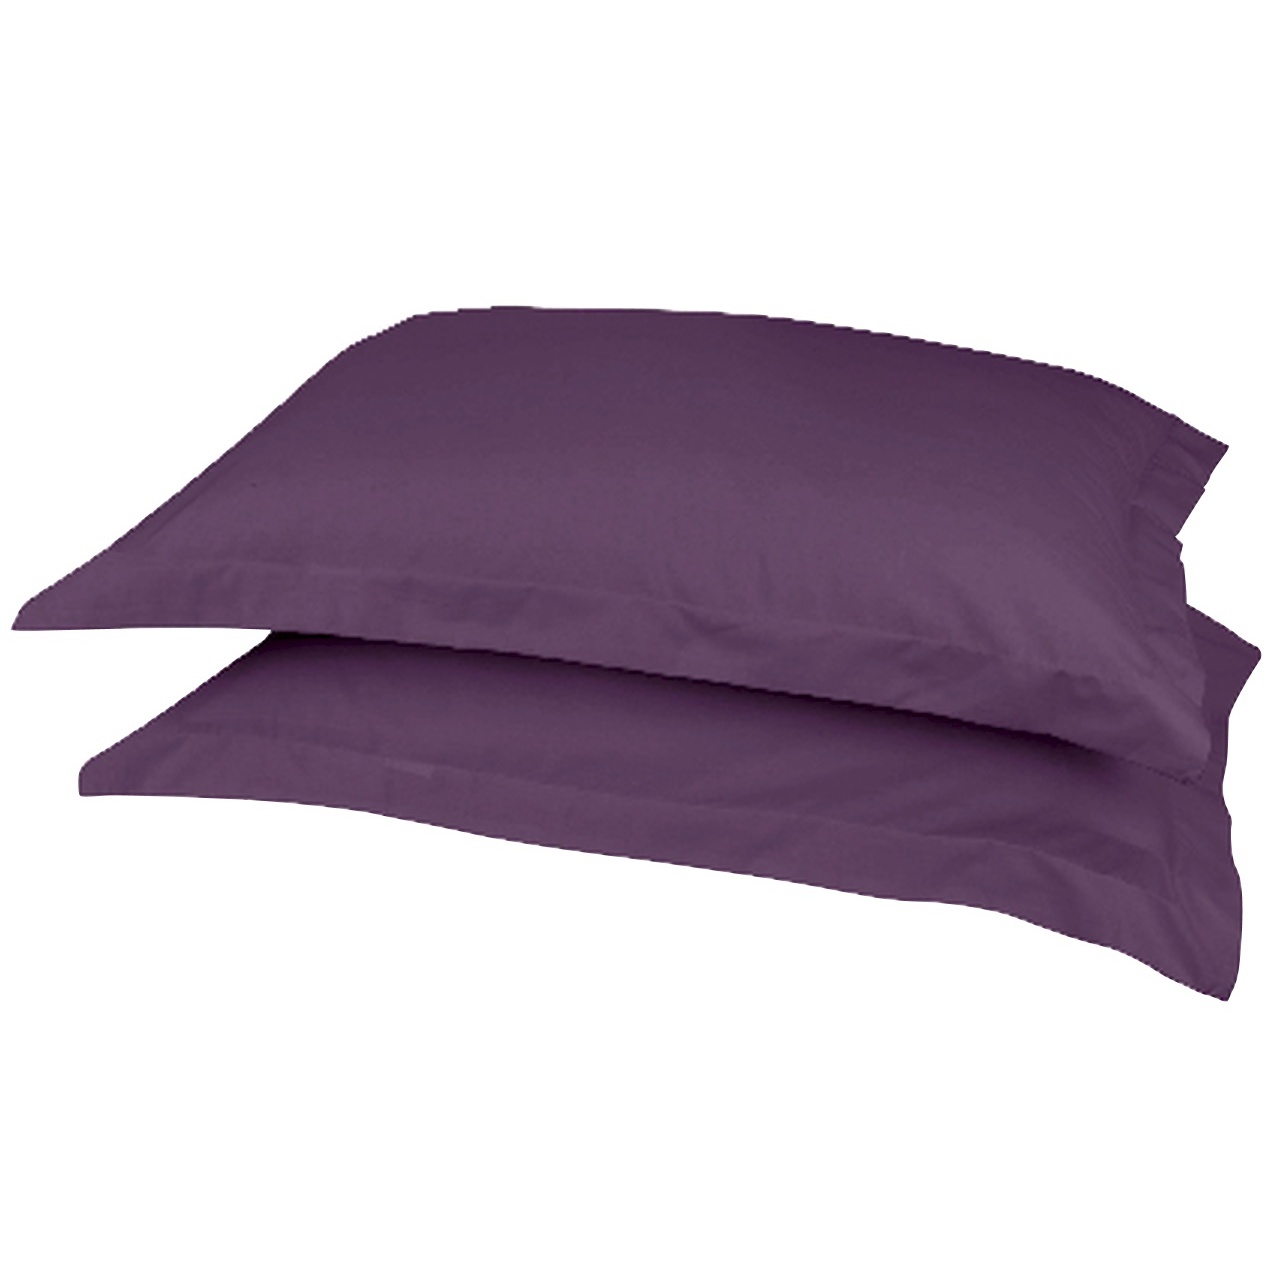 200-Thread Count Percale Oxford Pillowcases - Pair